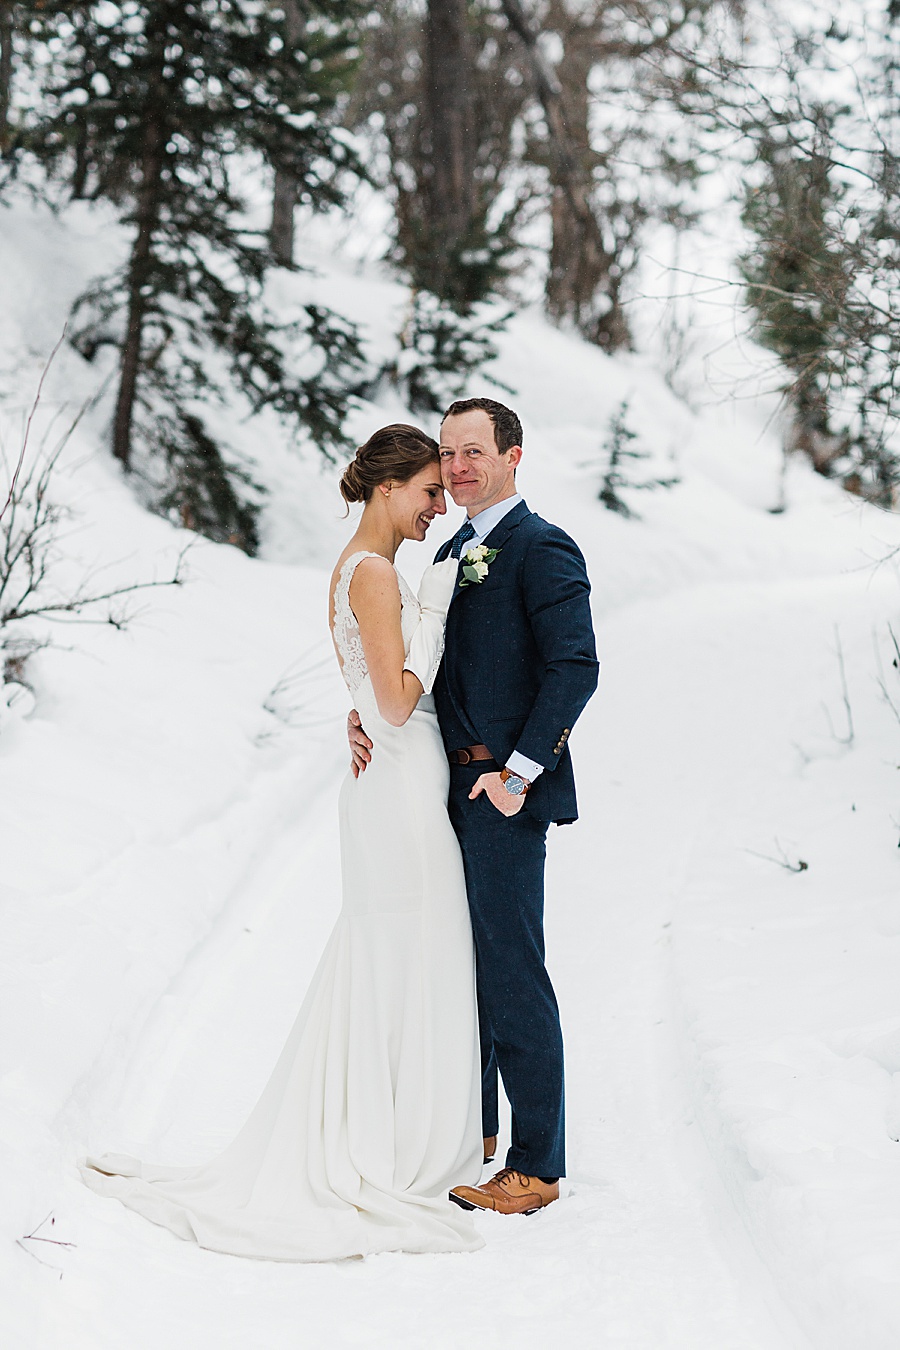 Jackson Hole Winter Wedding at Triangle X Ranch by Jackson Hole Wedding Photographer Amy Galbraith